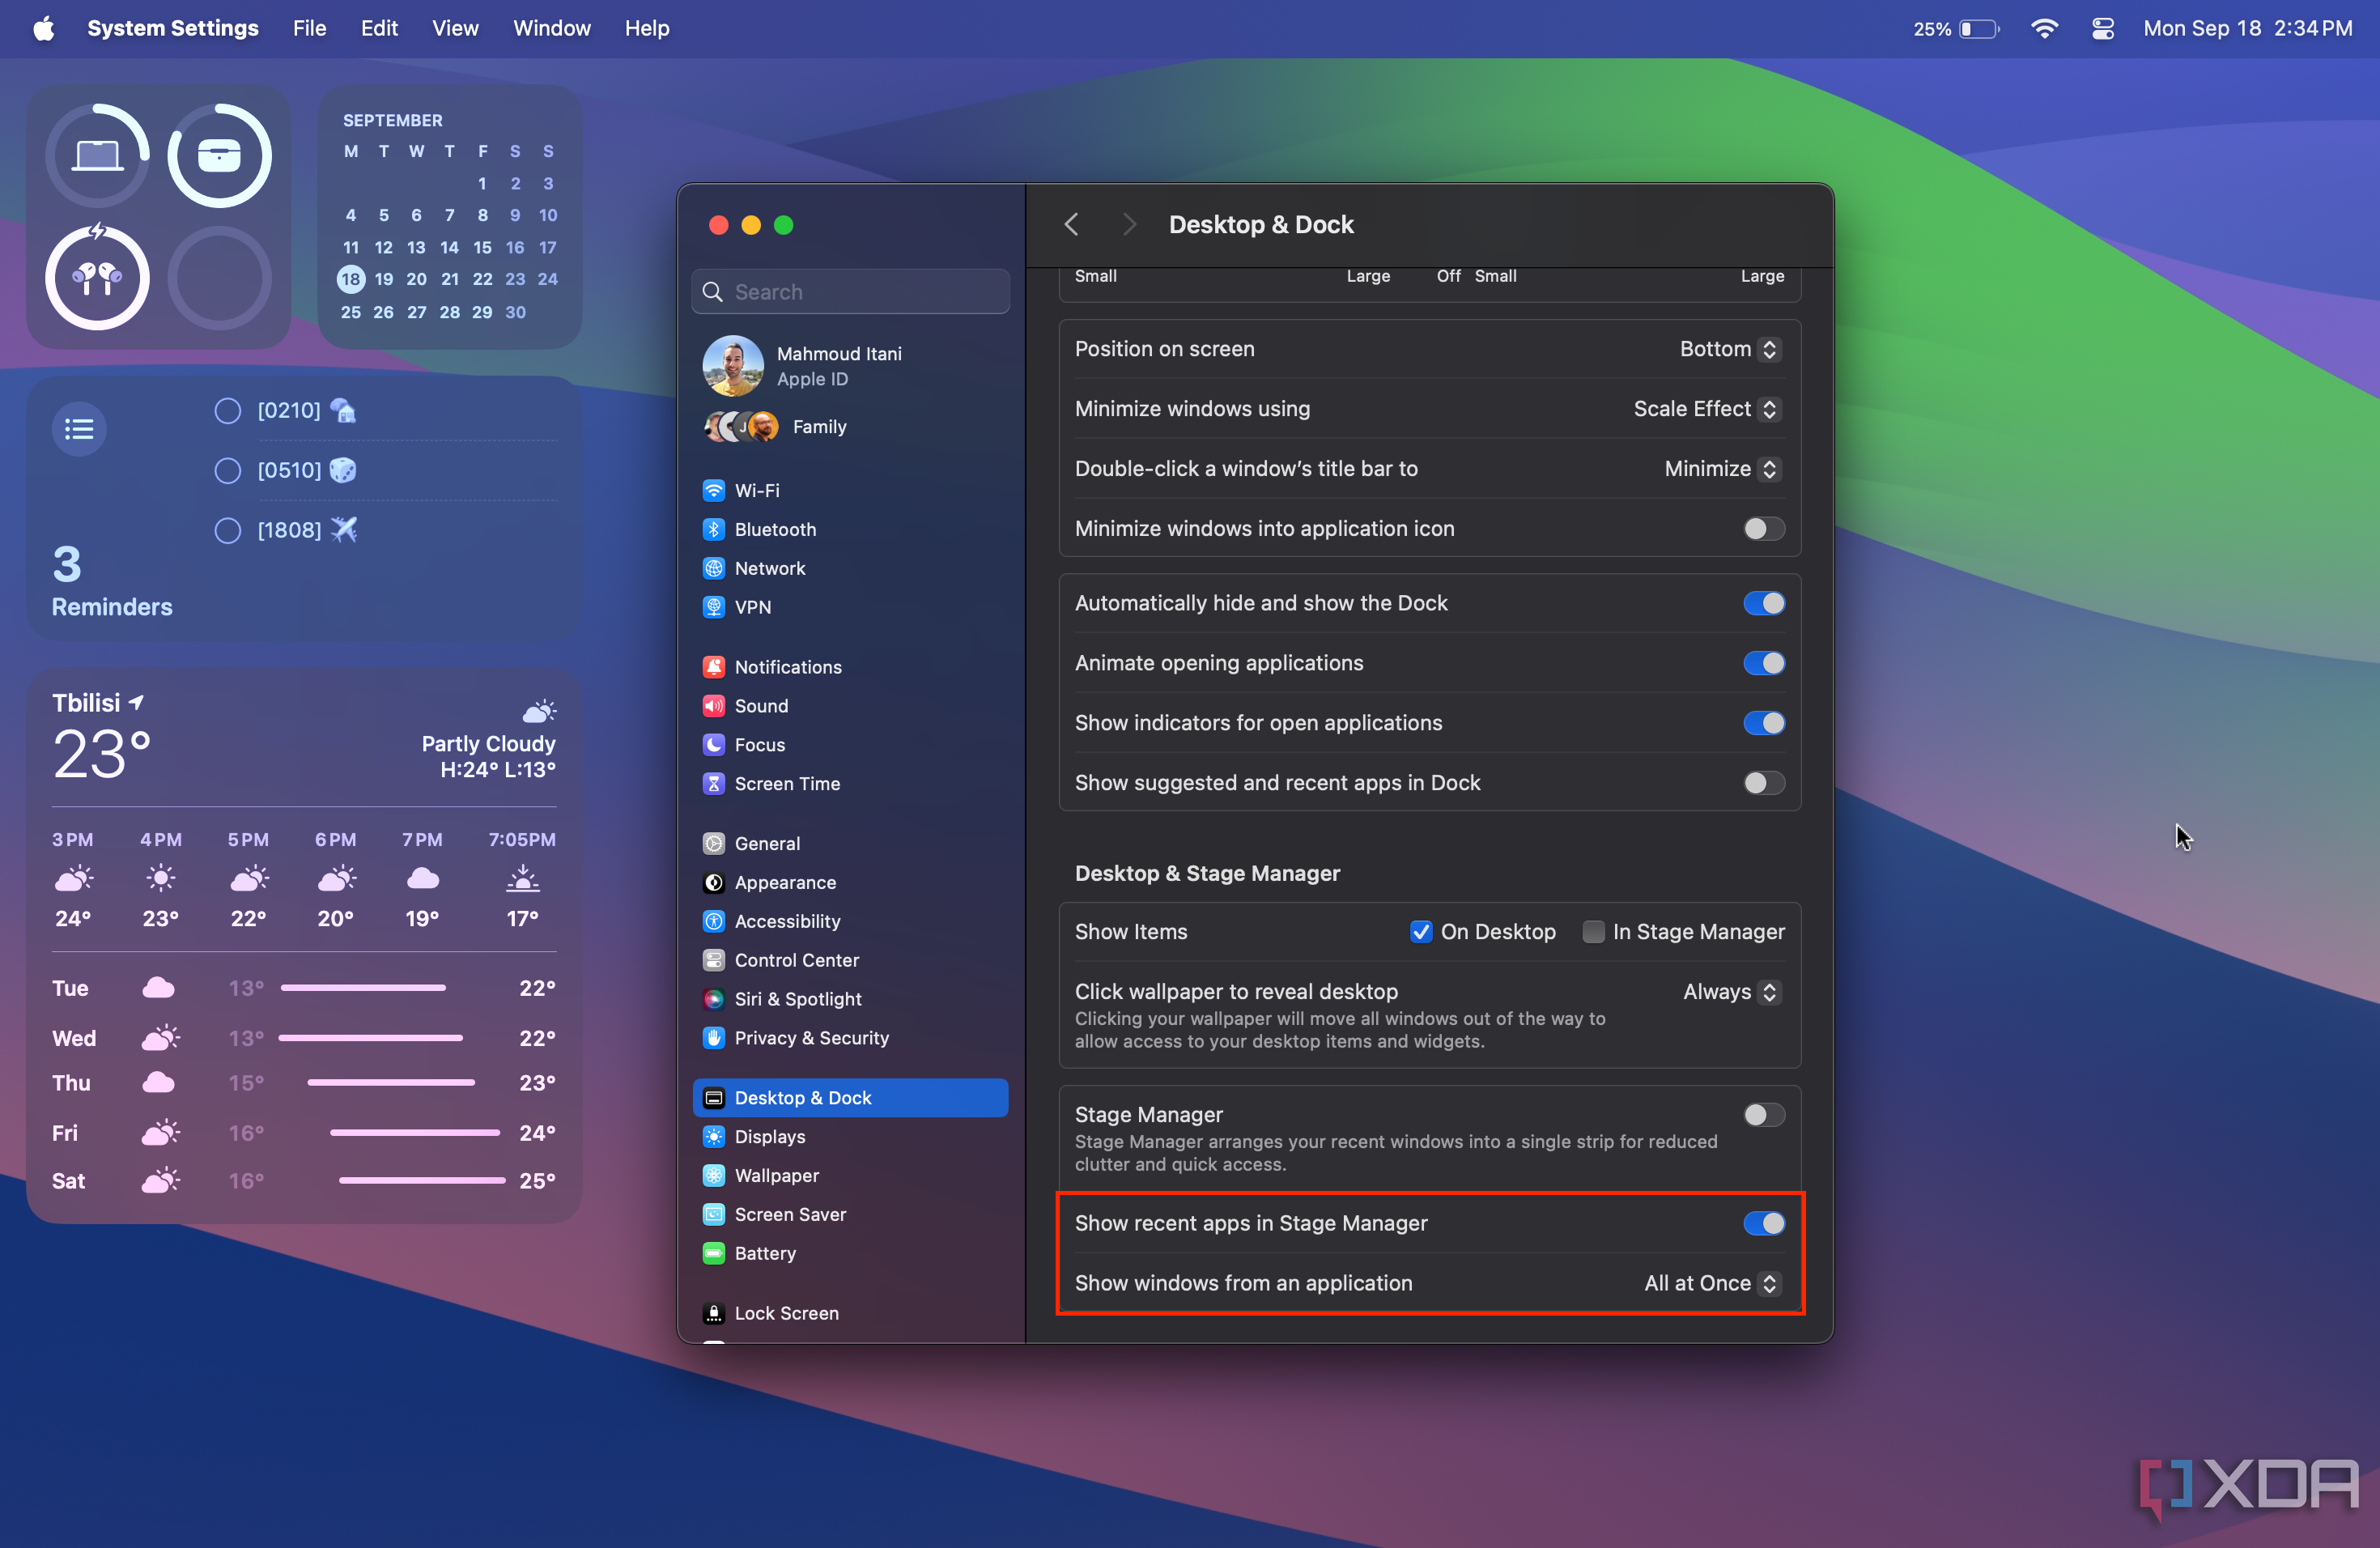 Desktop & Dock options settings screen.